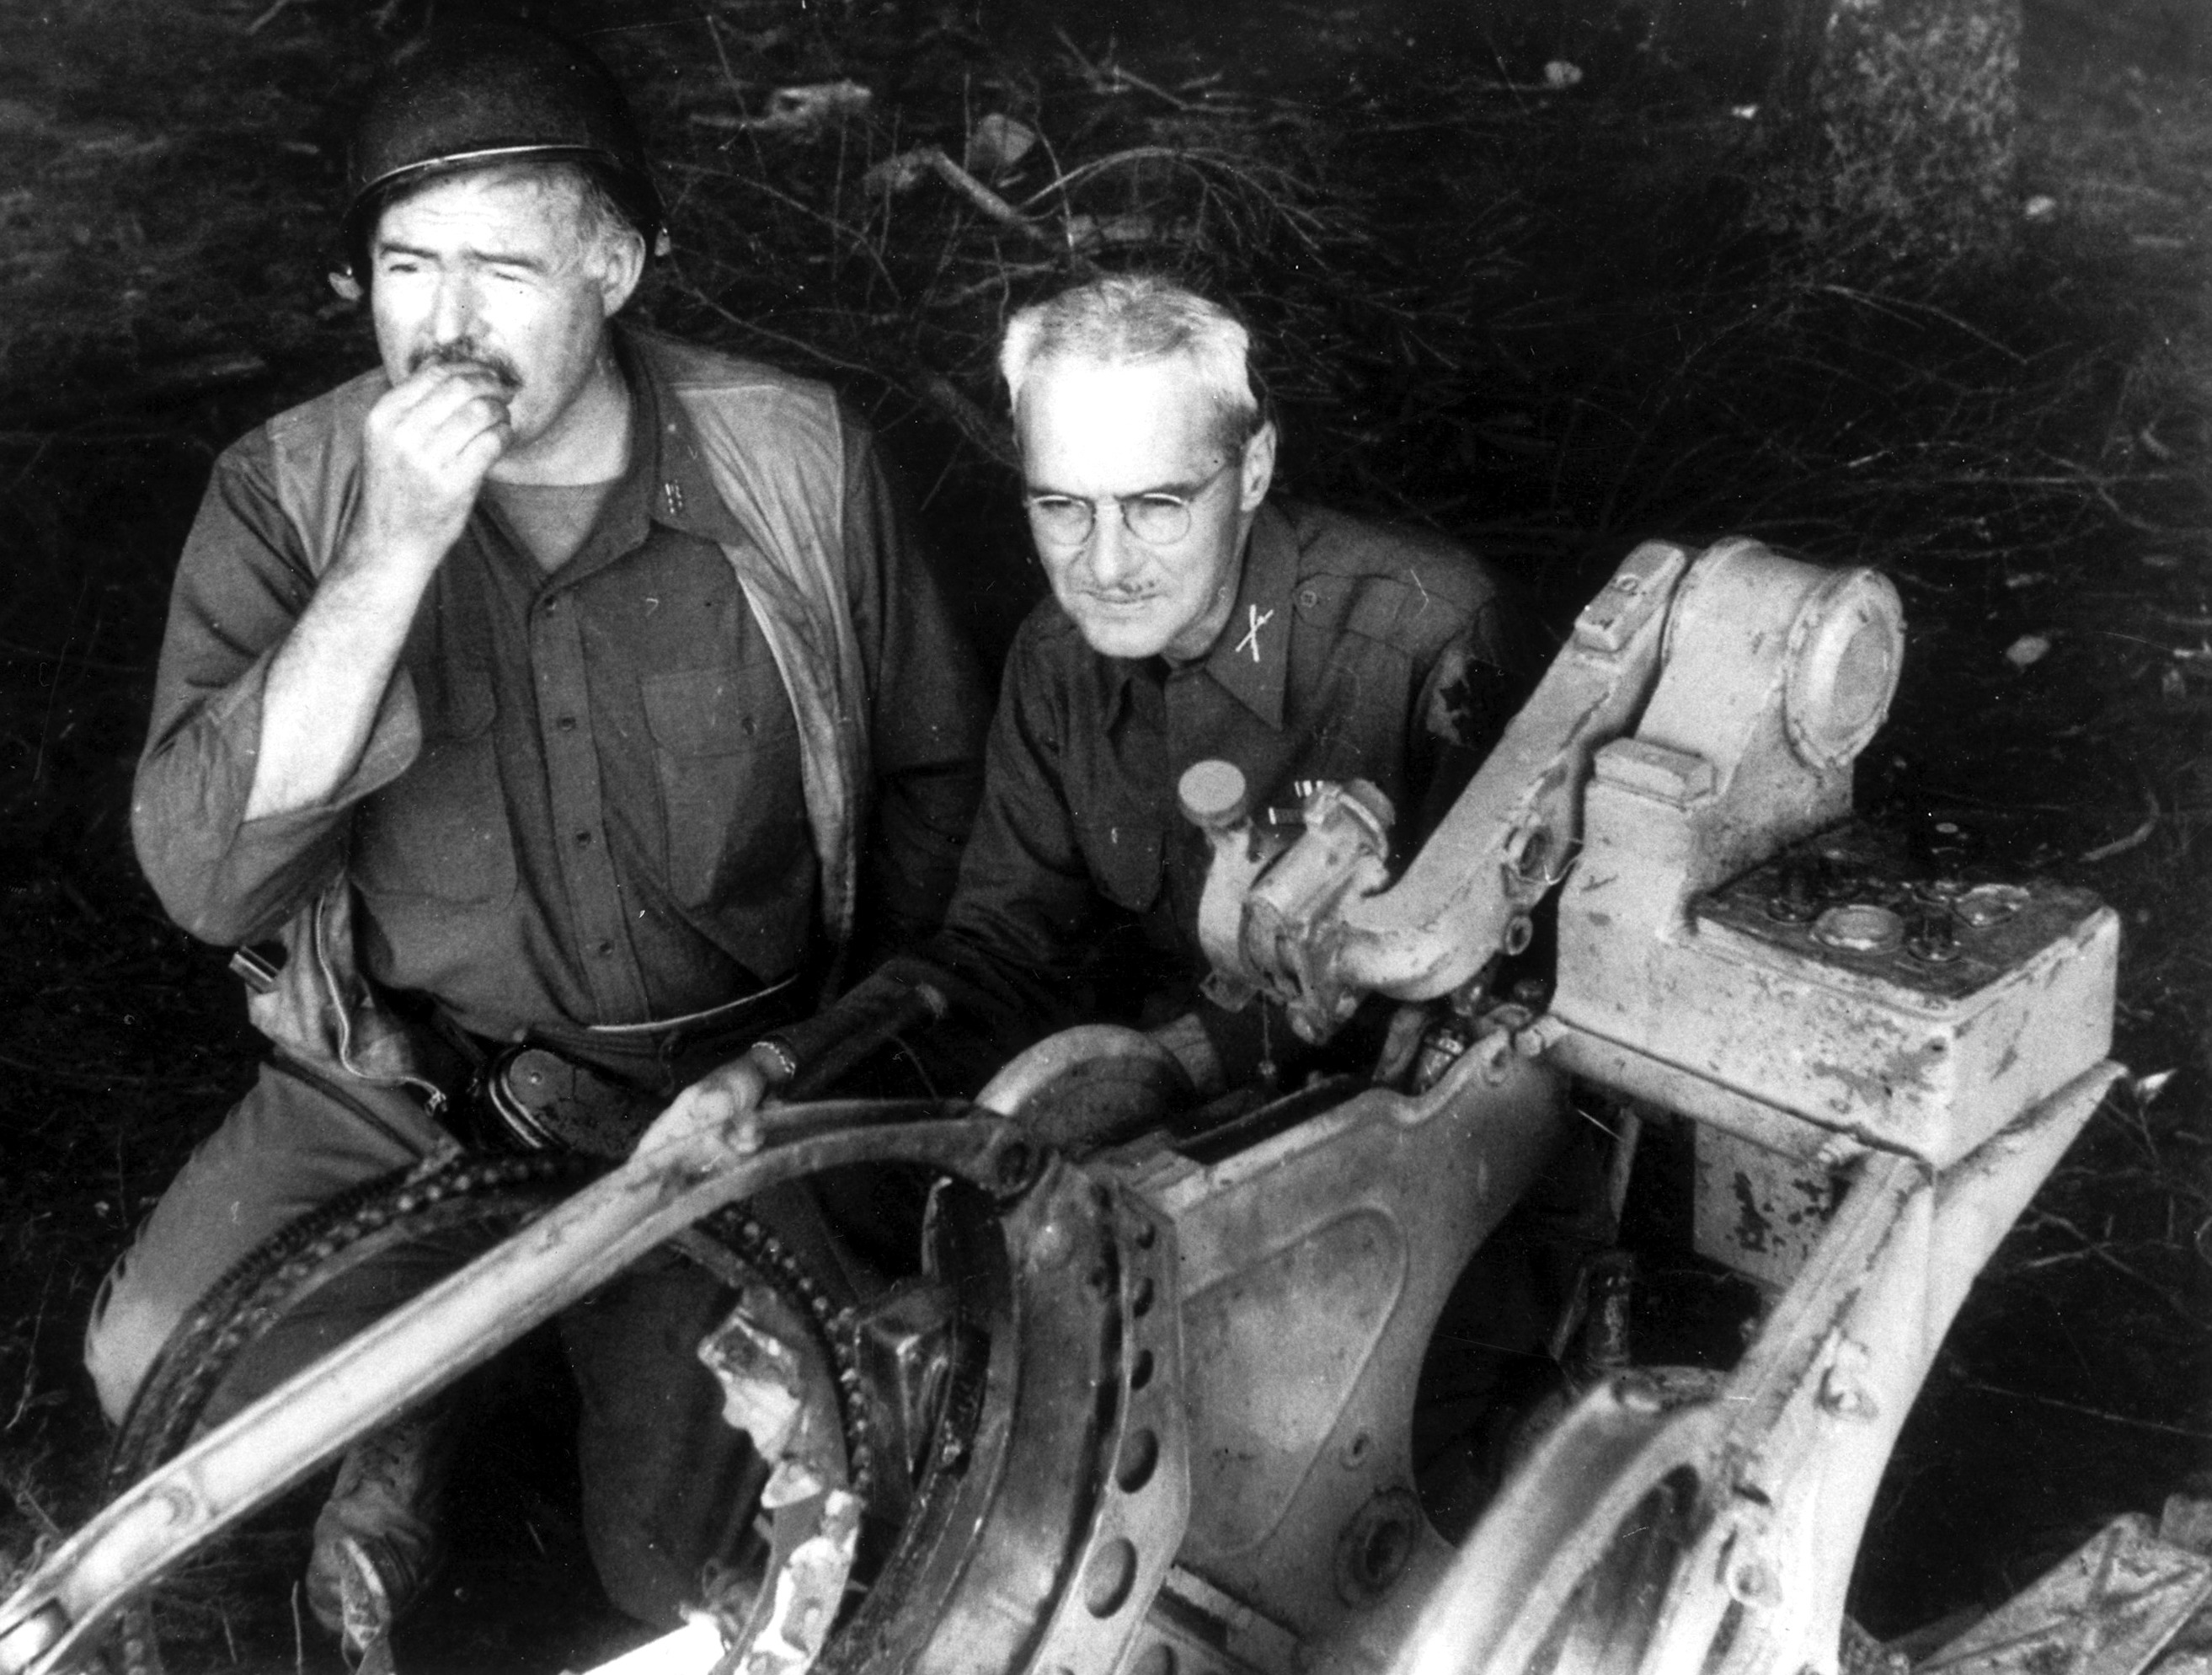 Ernest_Hemingway_with_Colonel_Charles_T._(Buck)_Lanham_September_18,_1944_-_NARA_-_192699